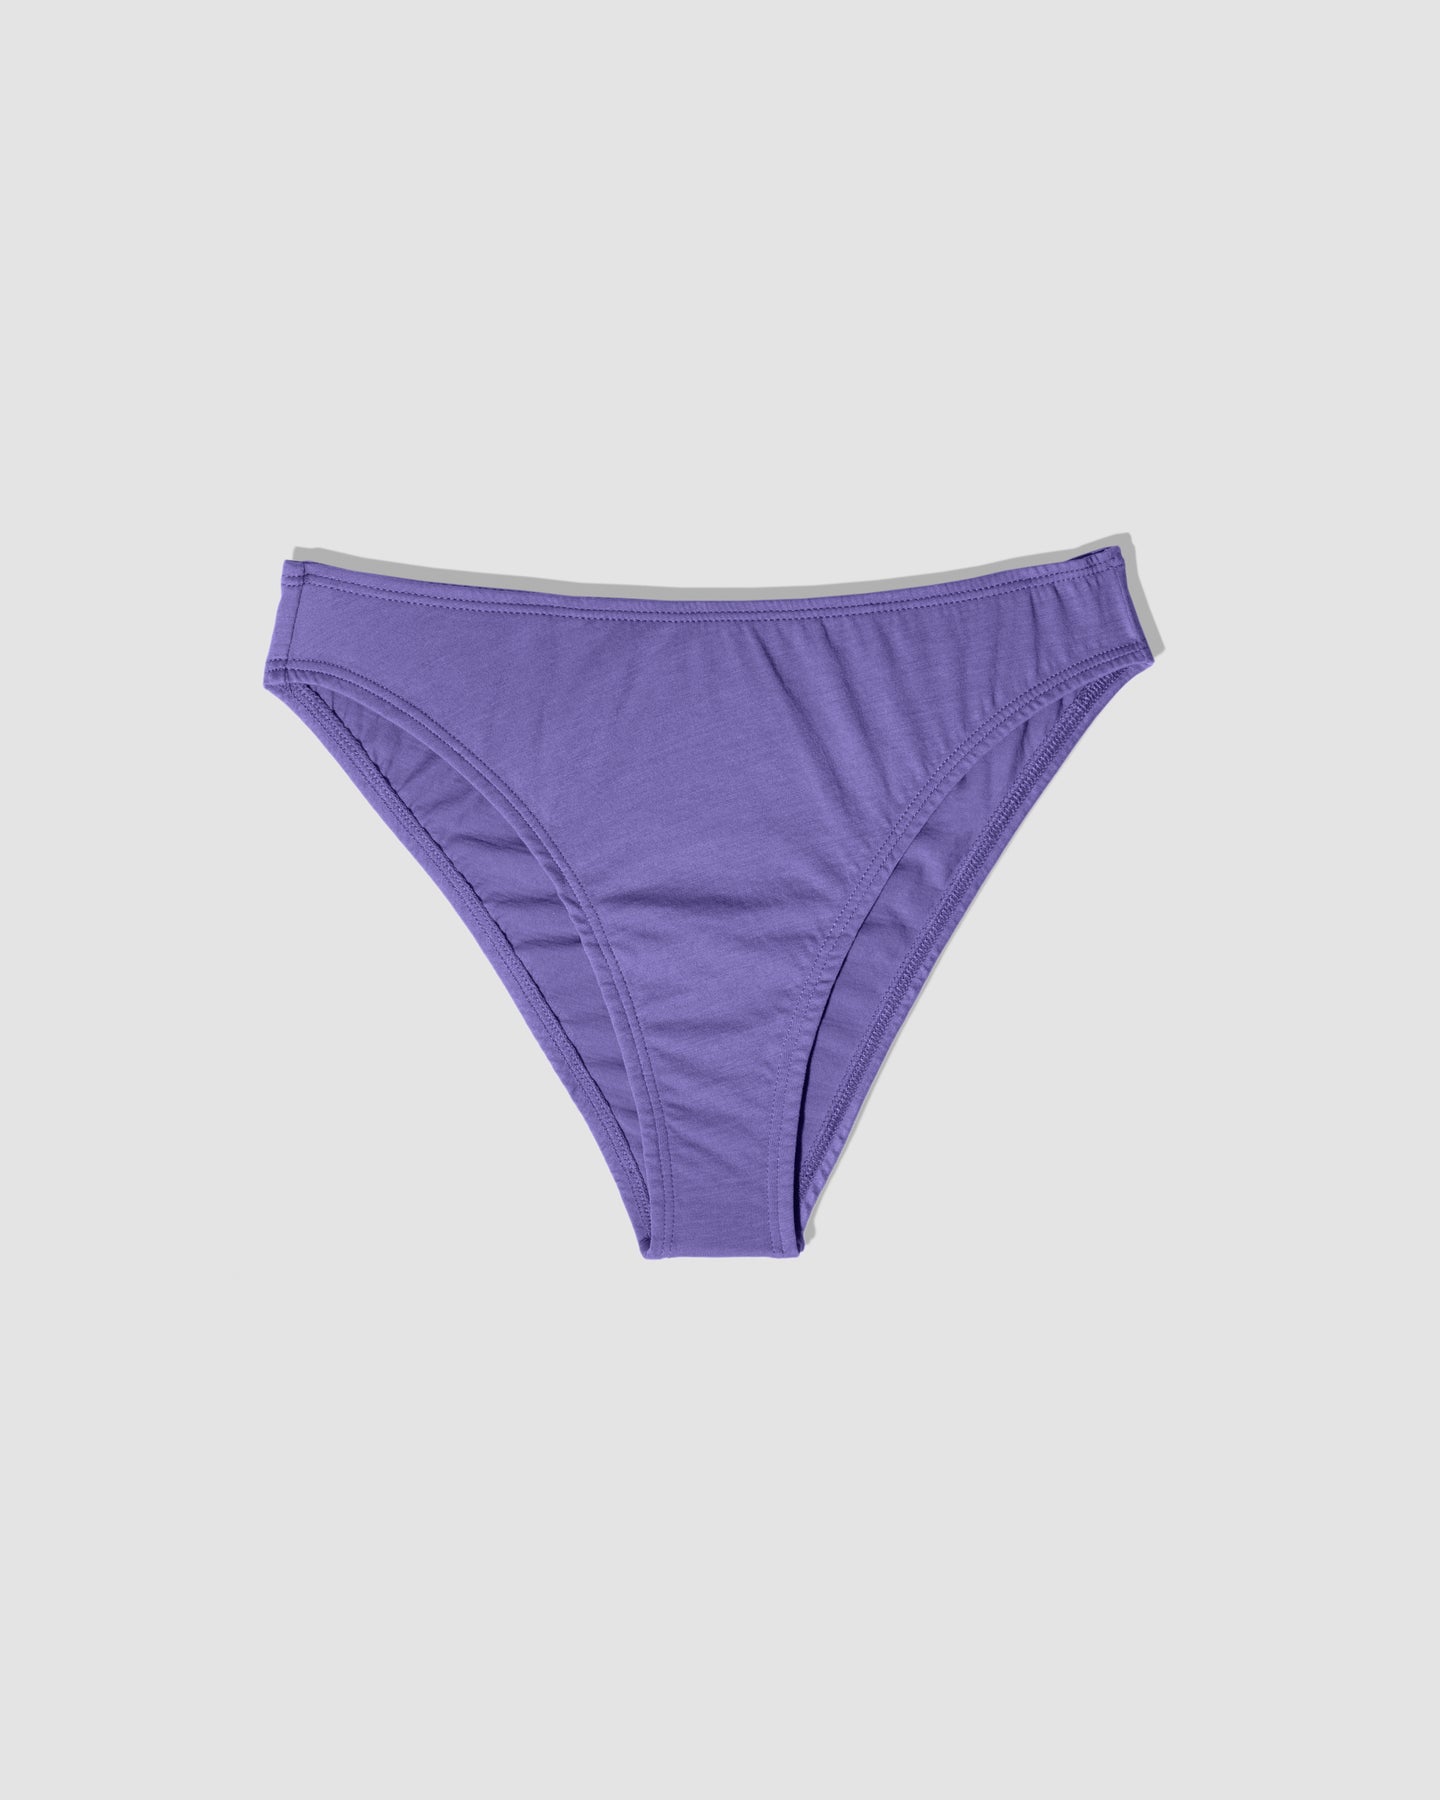 LBECLEY French Cut Underwear for Women Ladies Underwear Stretch Bikini  Panties Low Waist Fashion Ladies Soft Thong See Thru Bikini Underwear for Women  Purple One Size 